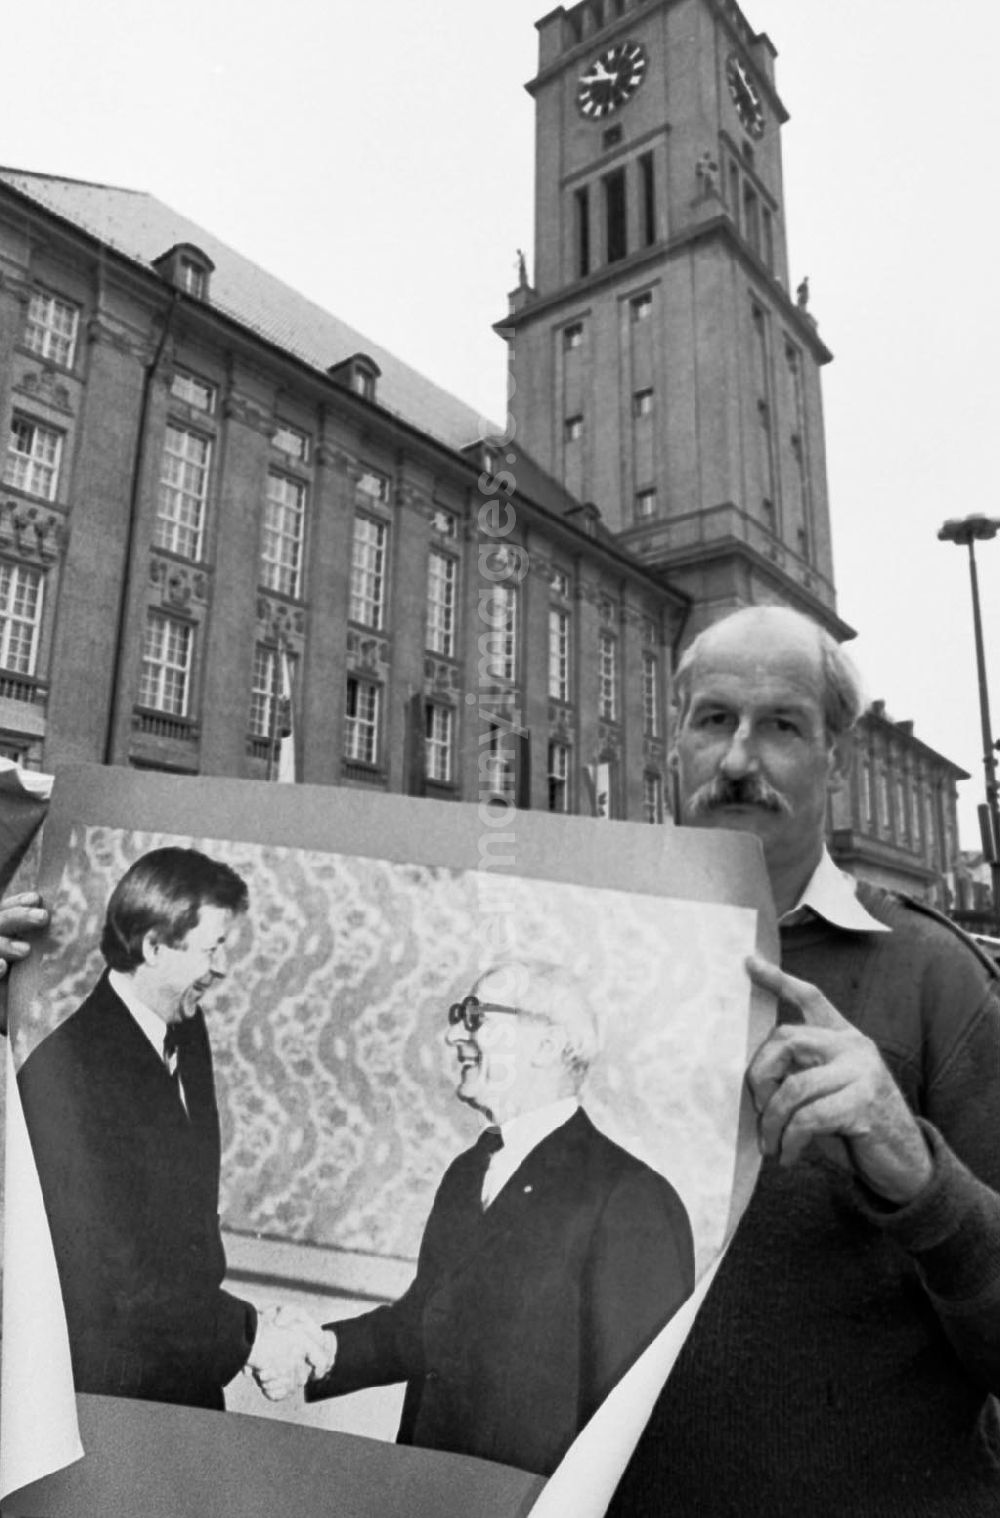 GDR photo archive: Berlin - Blumen-Händler verkauft Honecker-Diepgen-Poster.